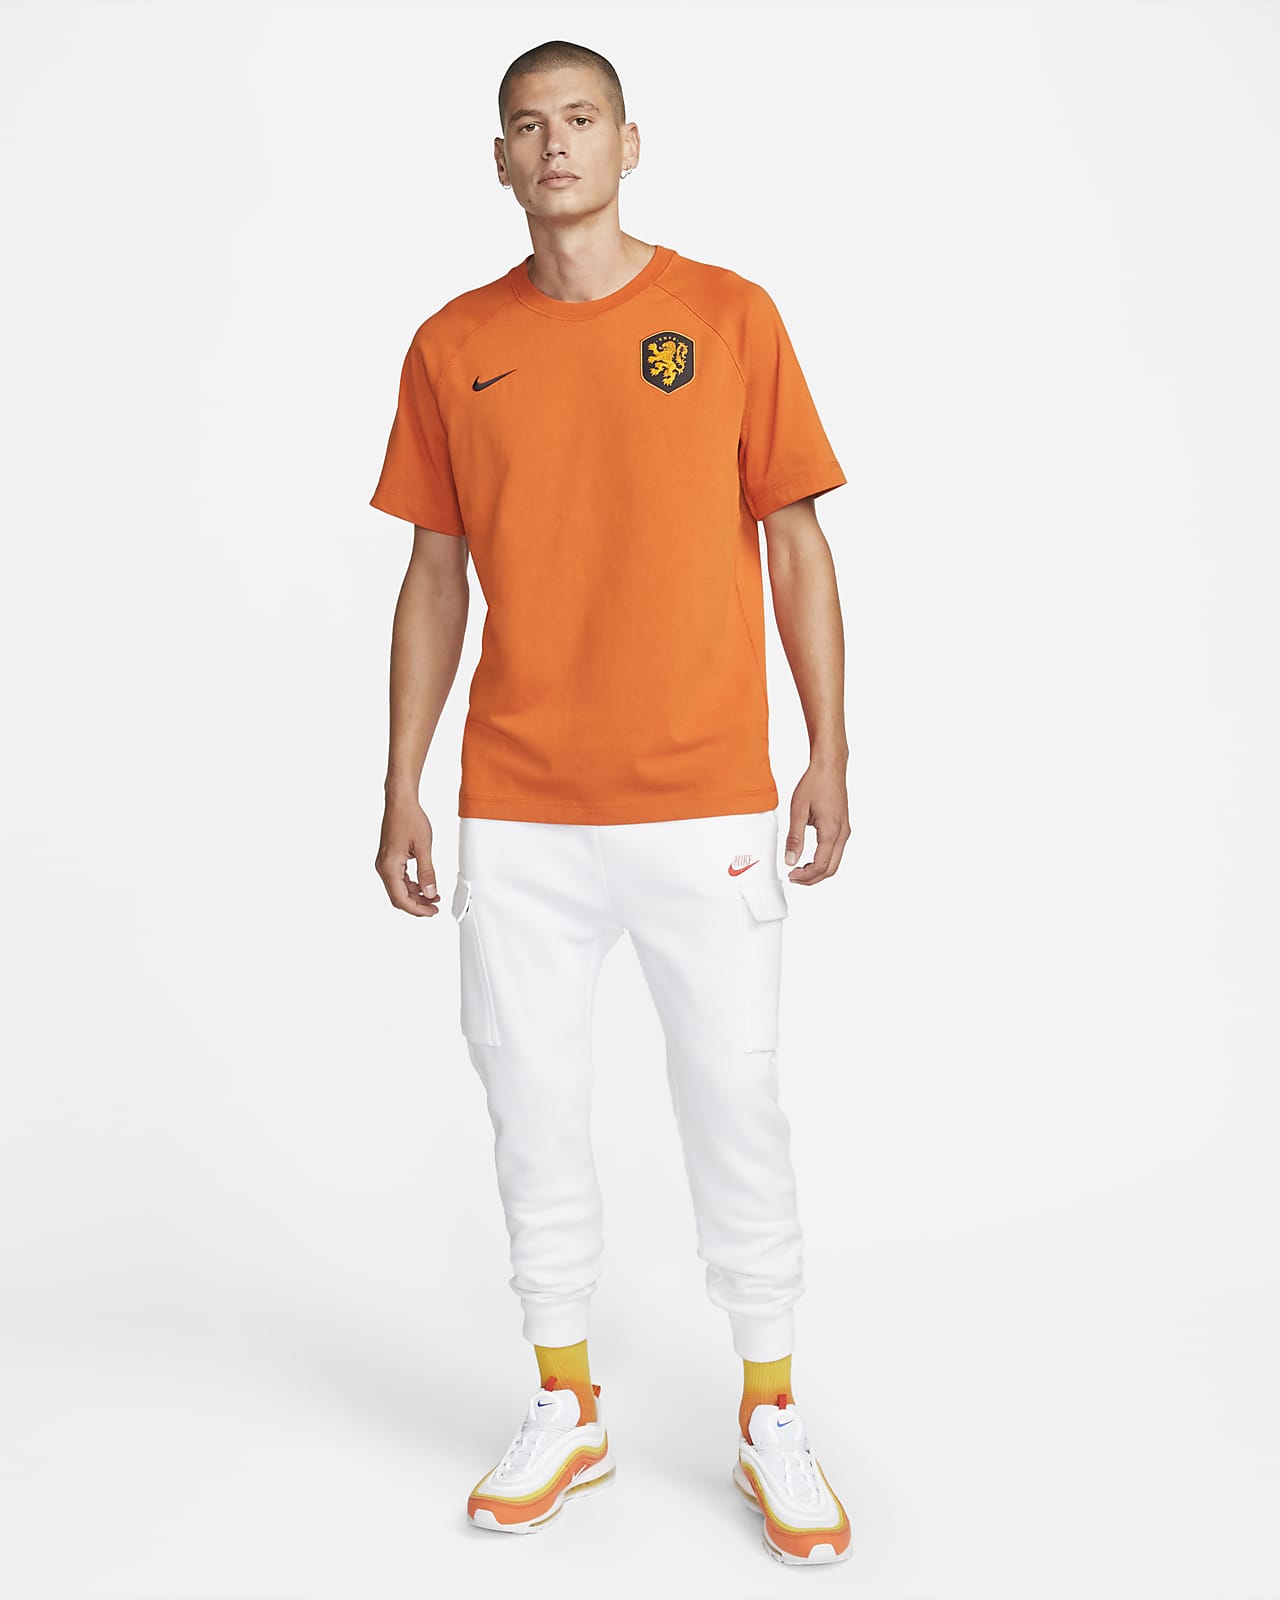 Netherlands Men's Nike Football Top. Nike LU